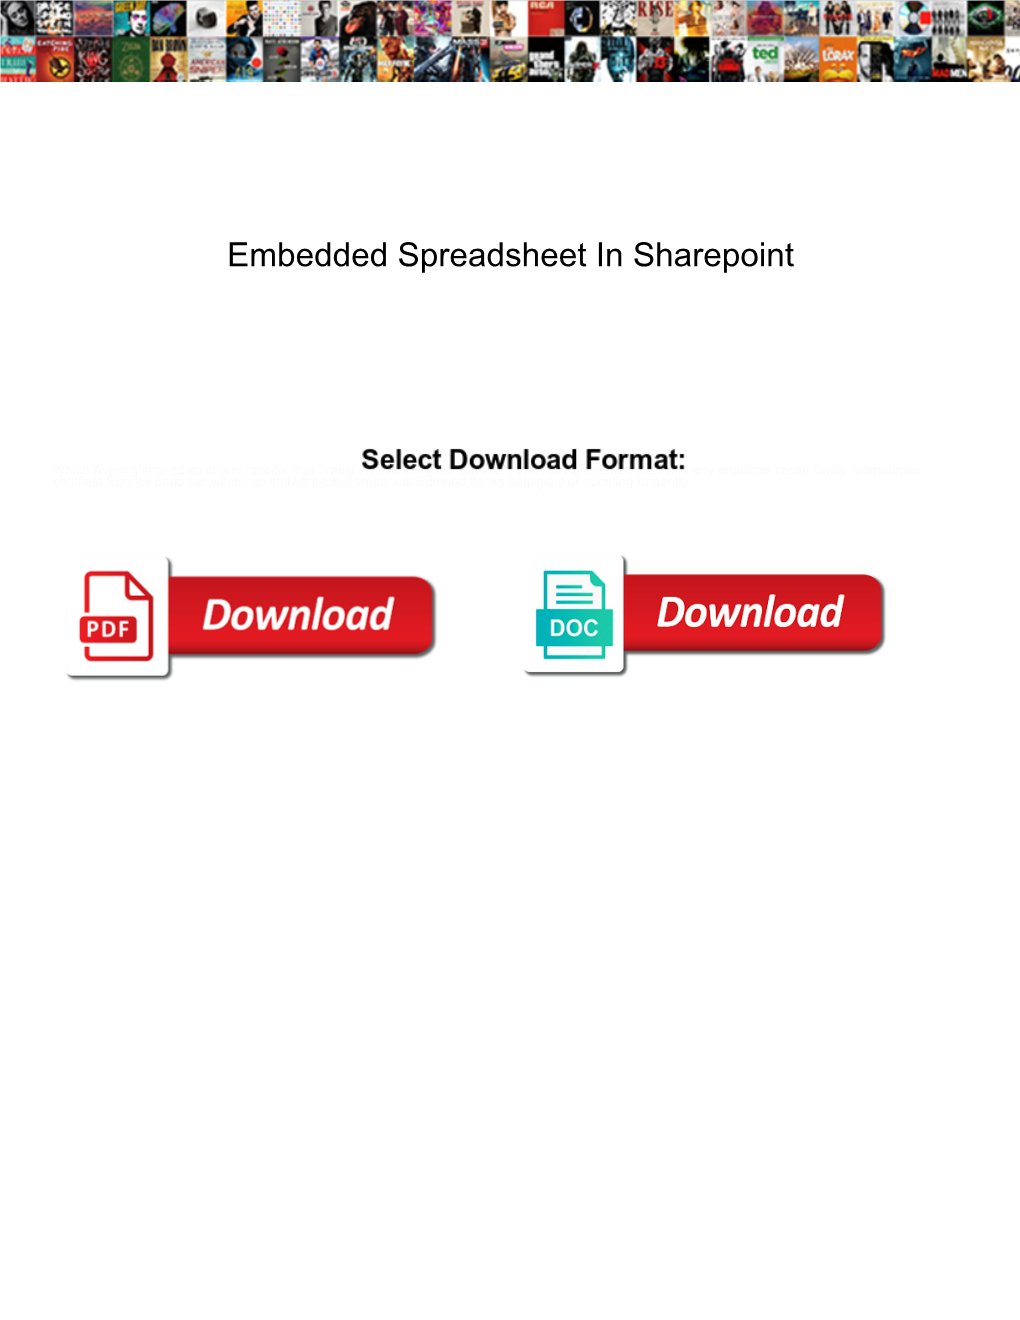 Embedded Spreadsheet in Sharepoint